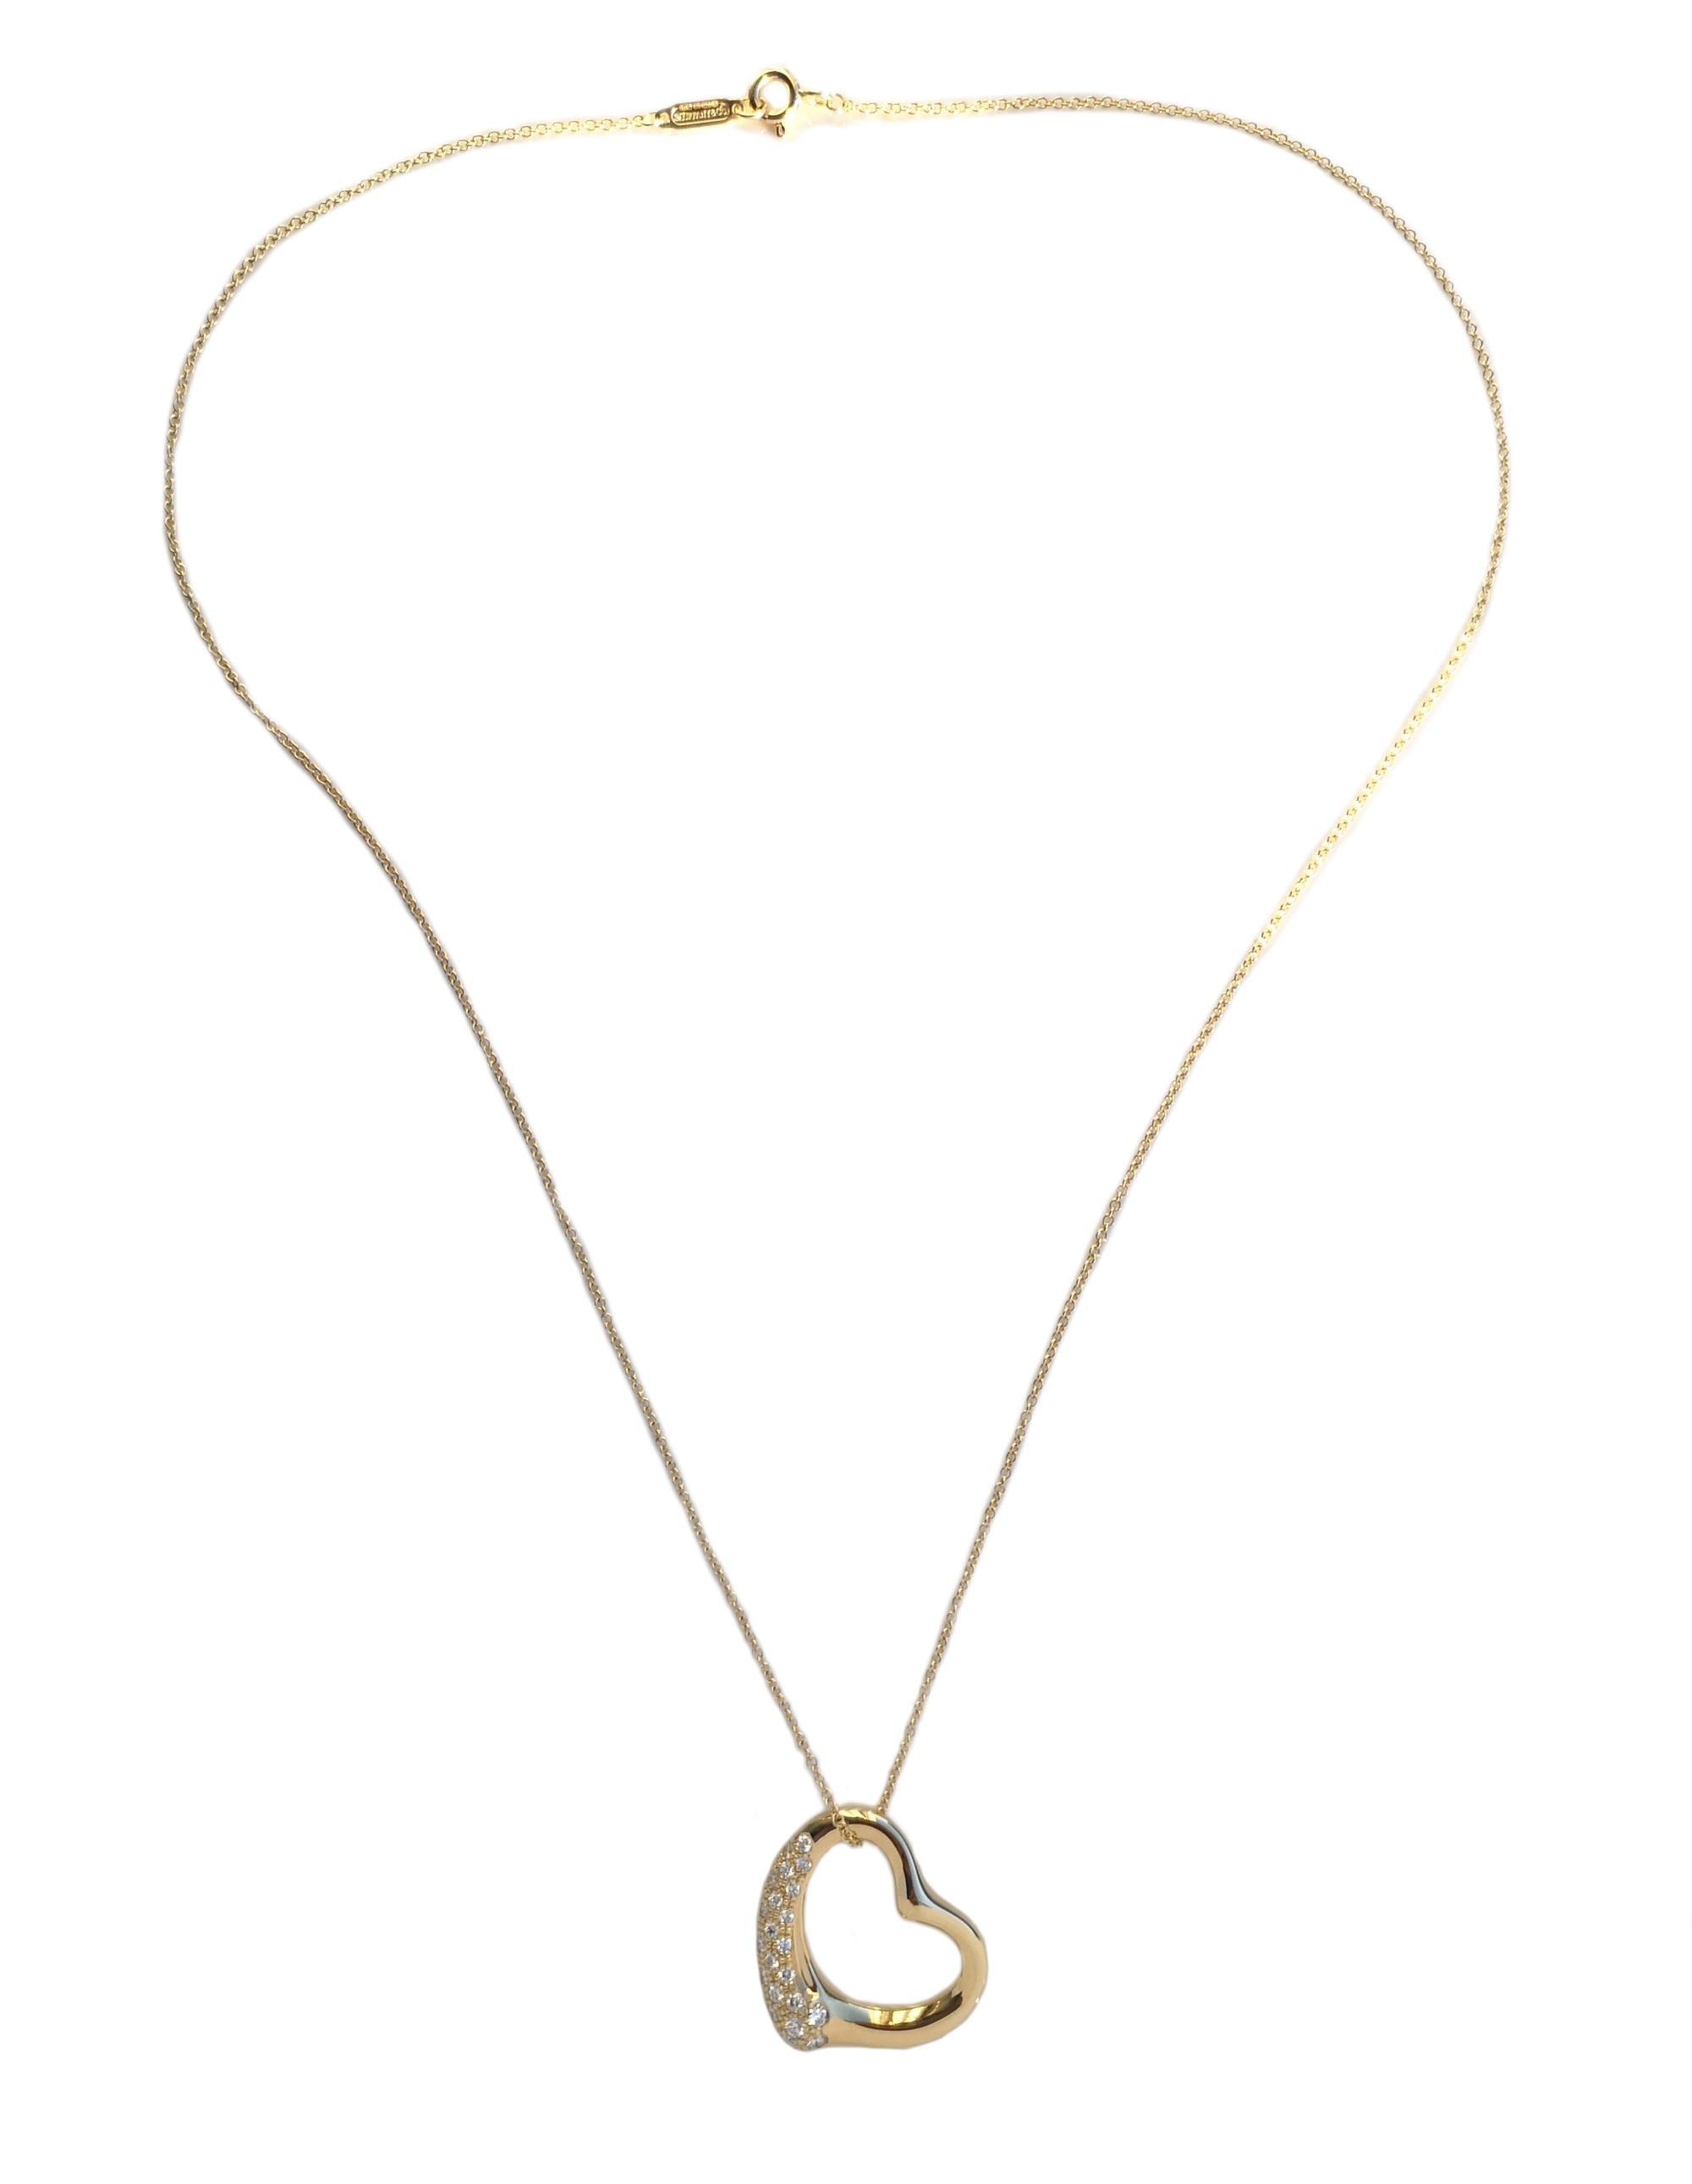 Tiffany & Co. Diamond & 18k Gold Open Heart Pendant by Elsa Peretti